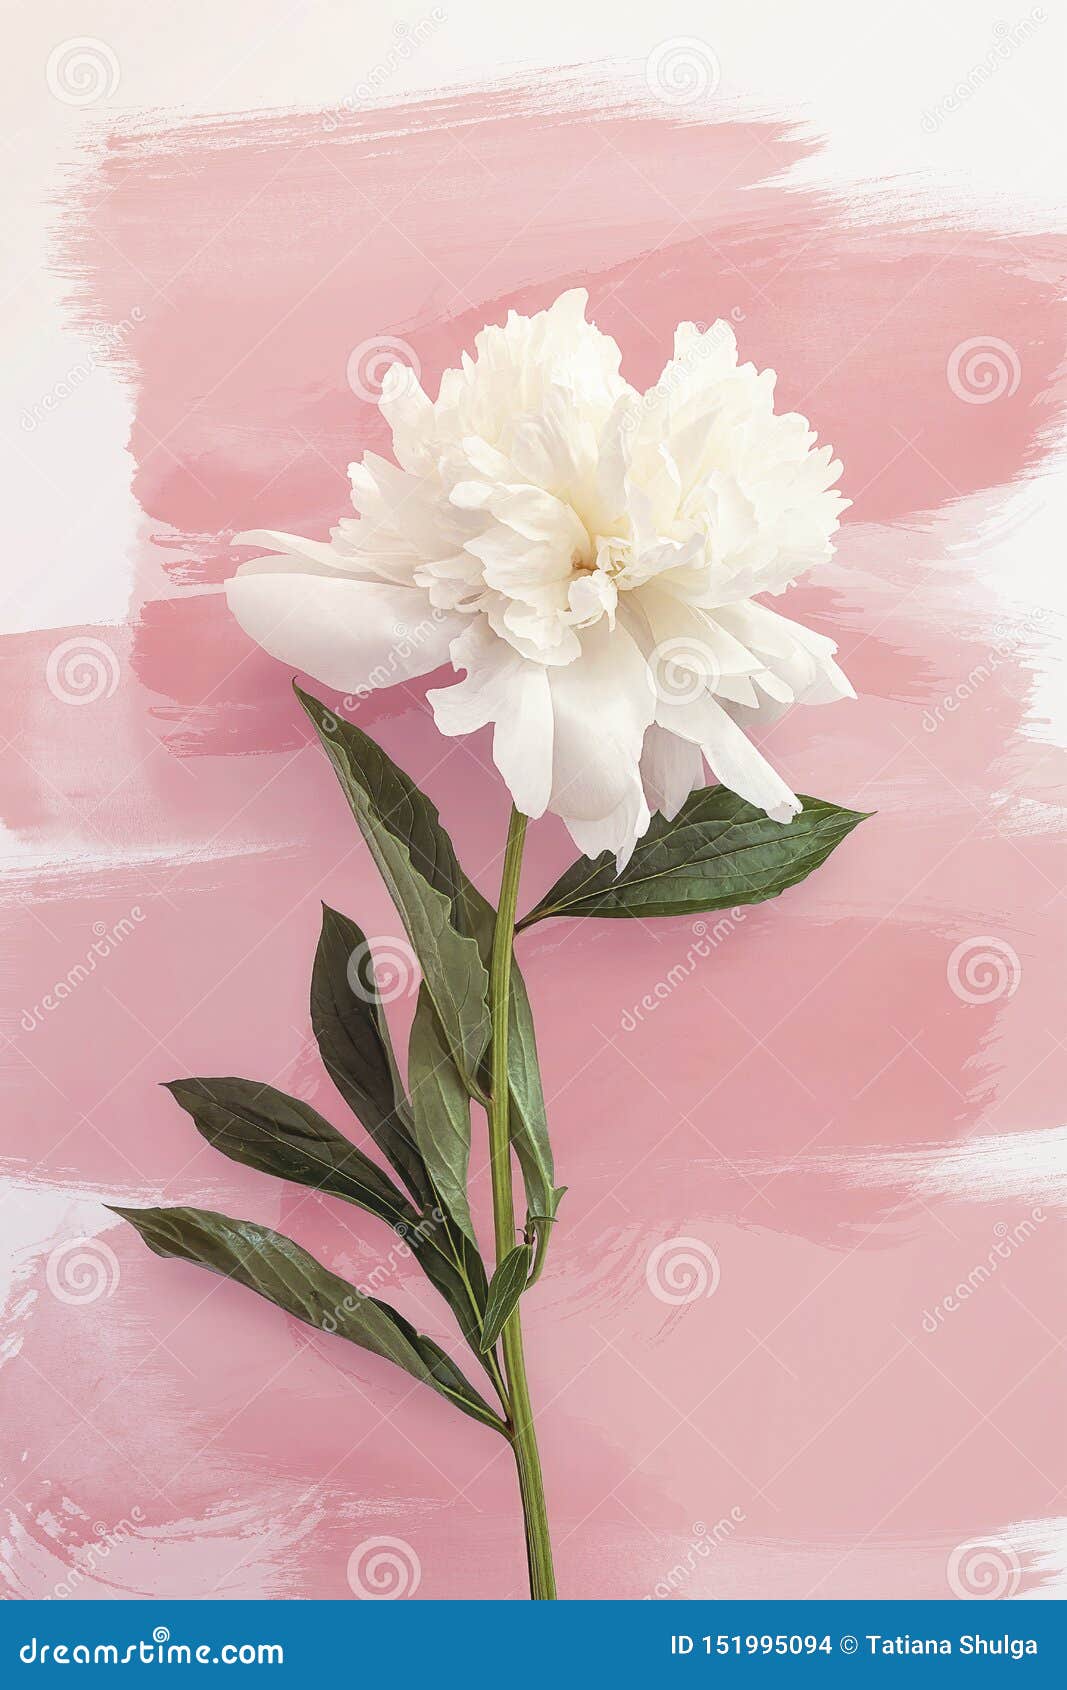 White Peony on Light Blush Pink Background. Summer Flower Peony Vertical  Print. Stock Photo - Image of nature, brush: 151995094